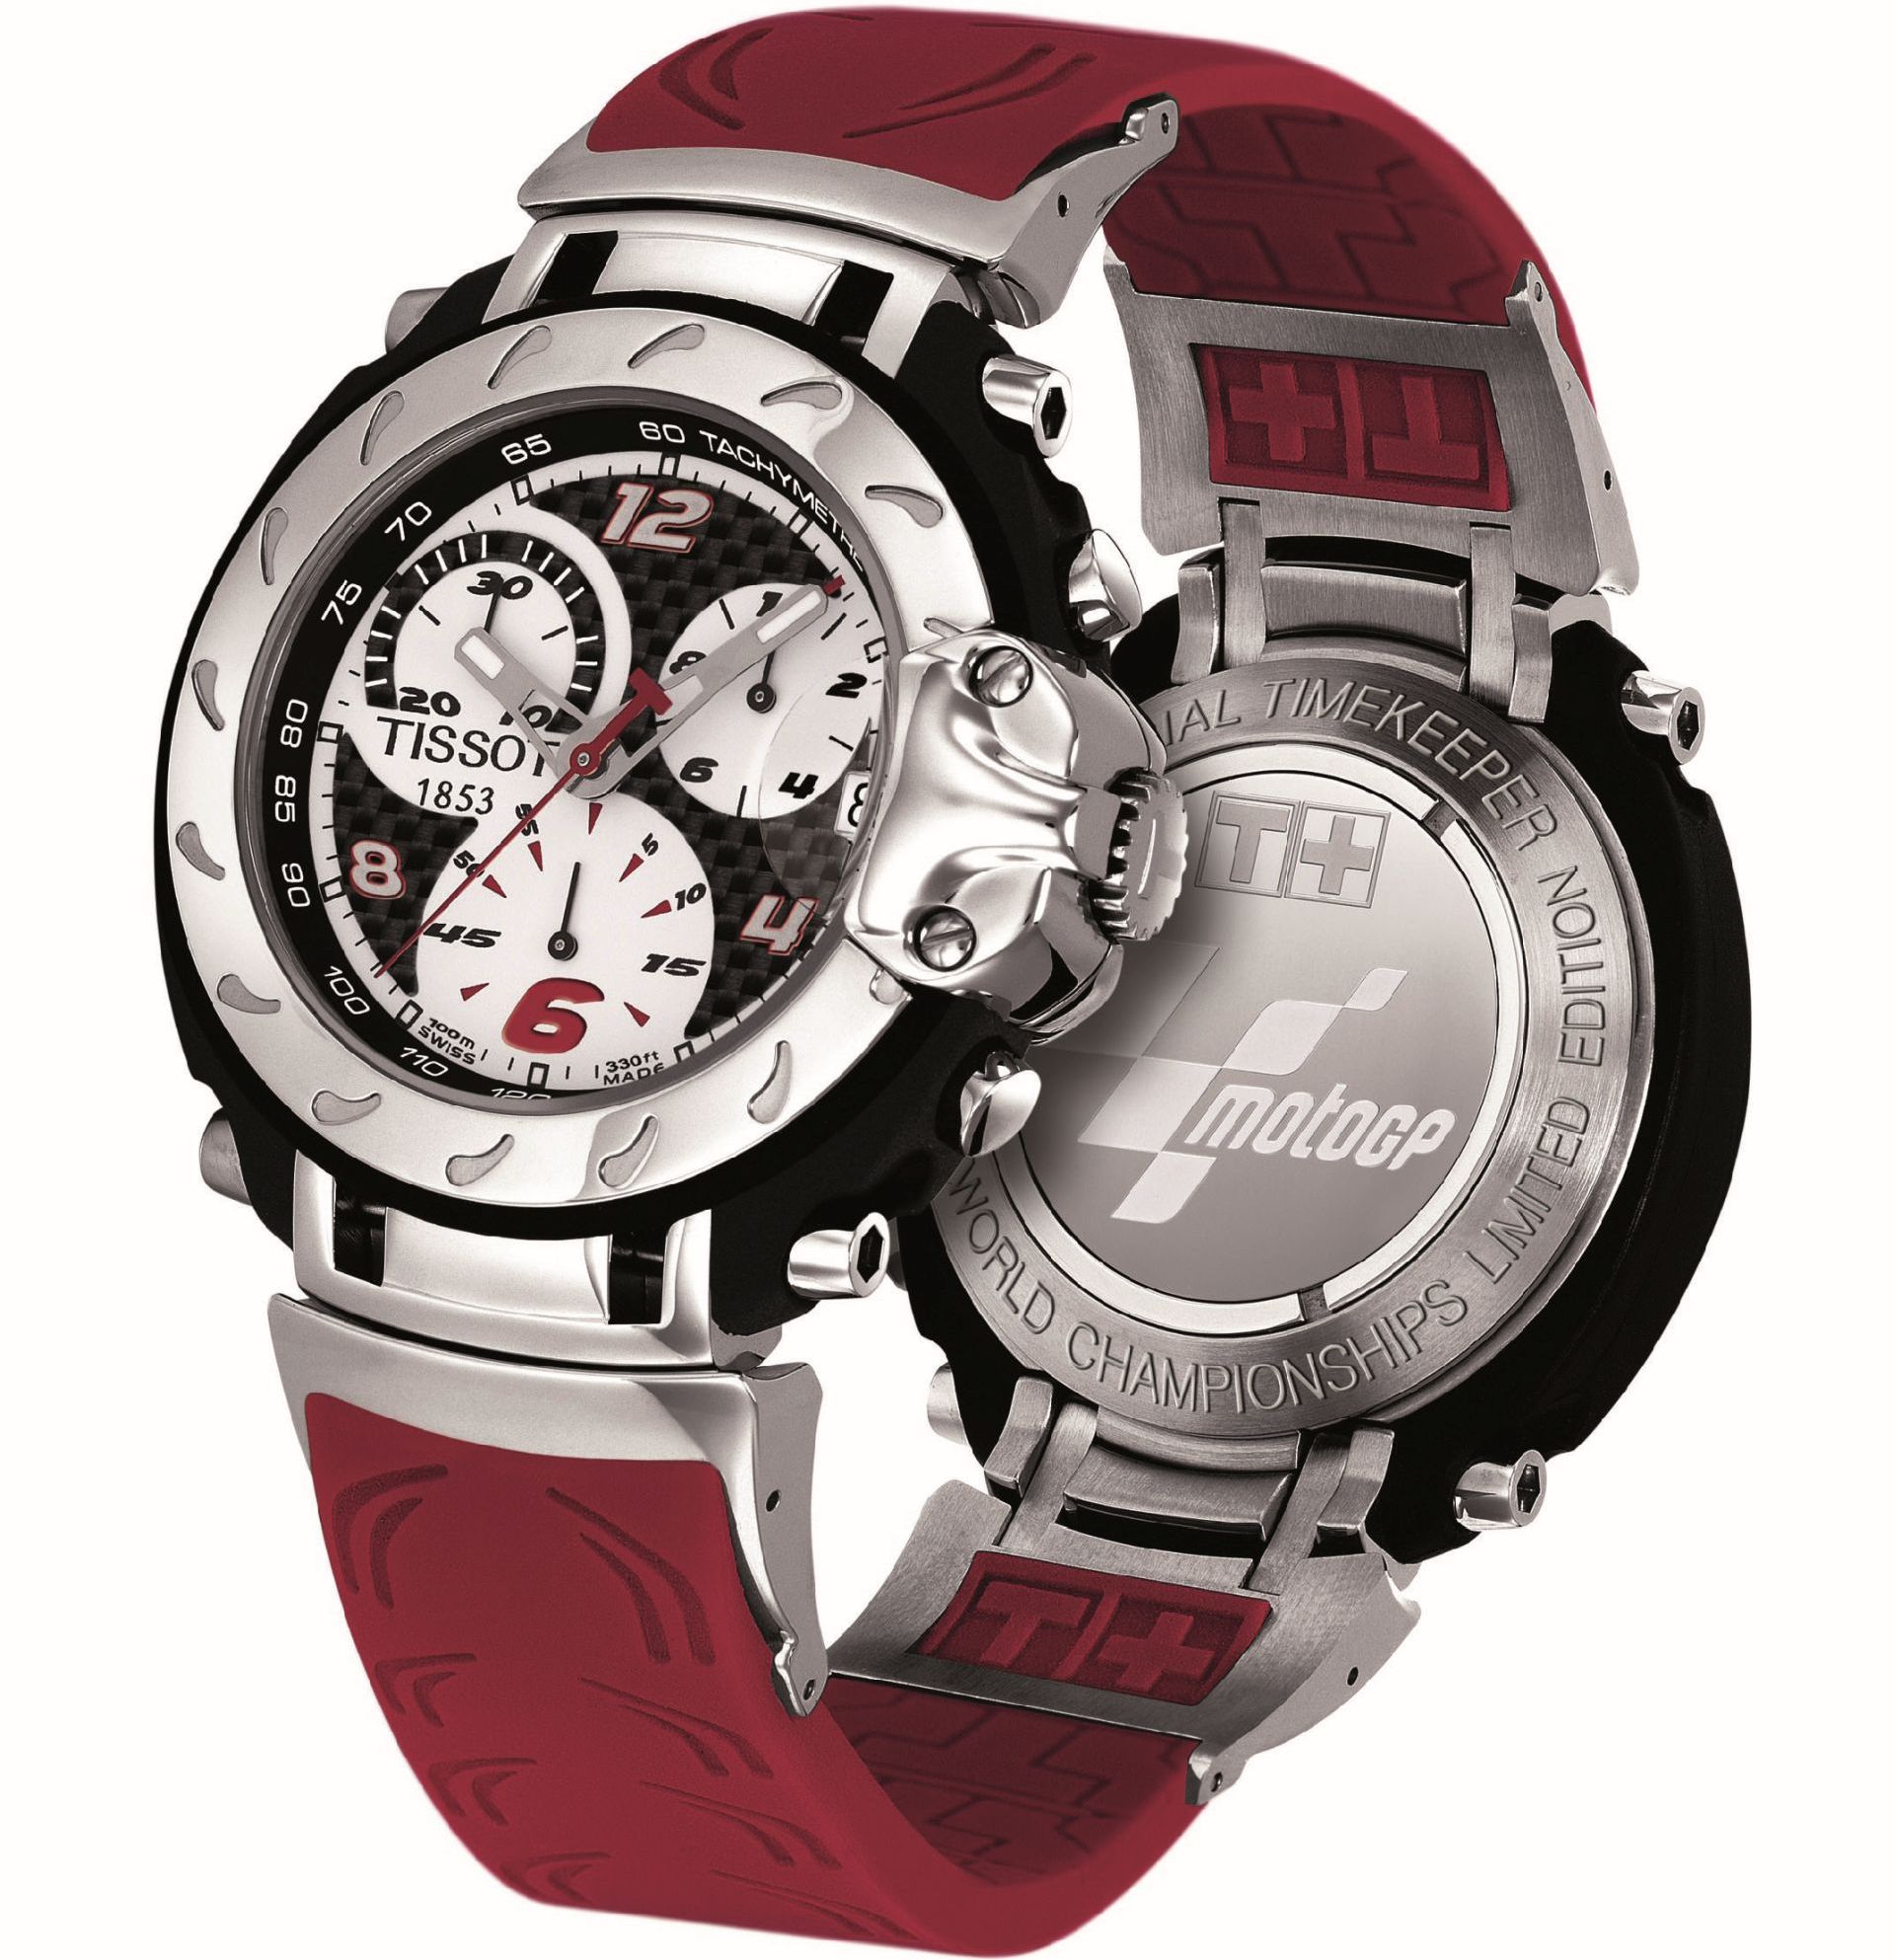 Tissot Official Motogp Watch Limited Edition 2007 Masterhorologer